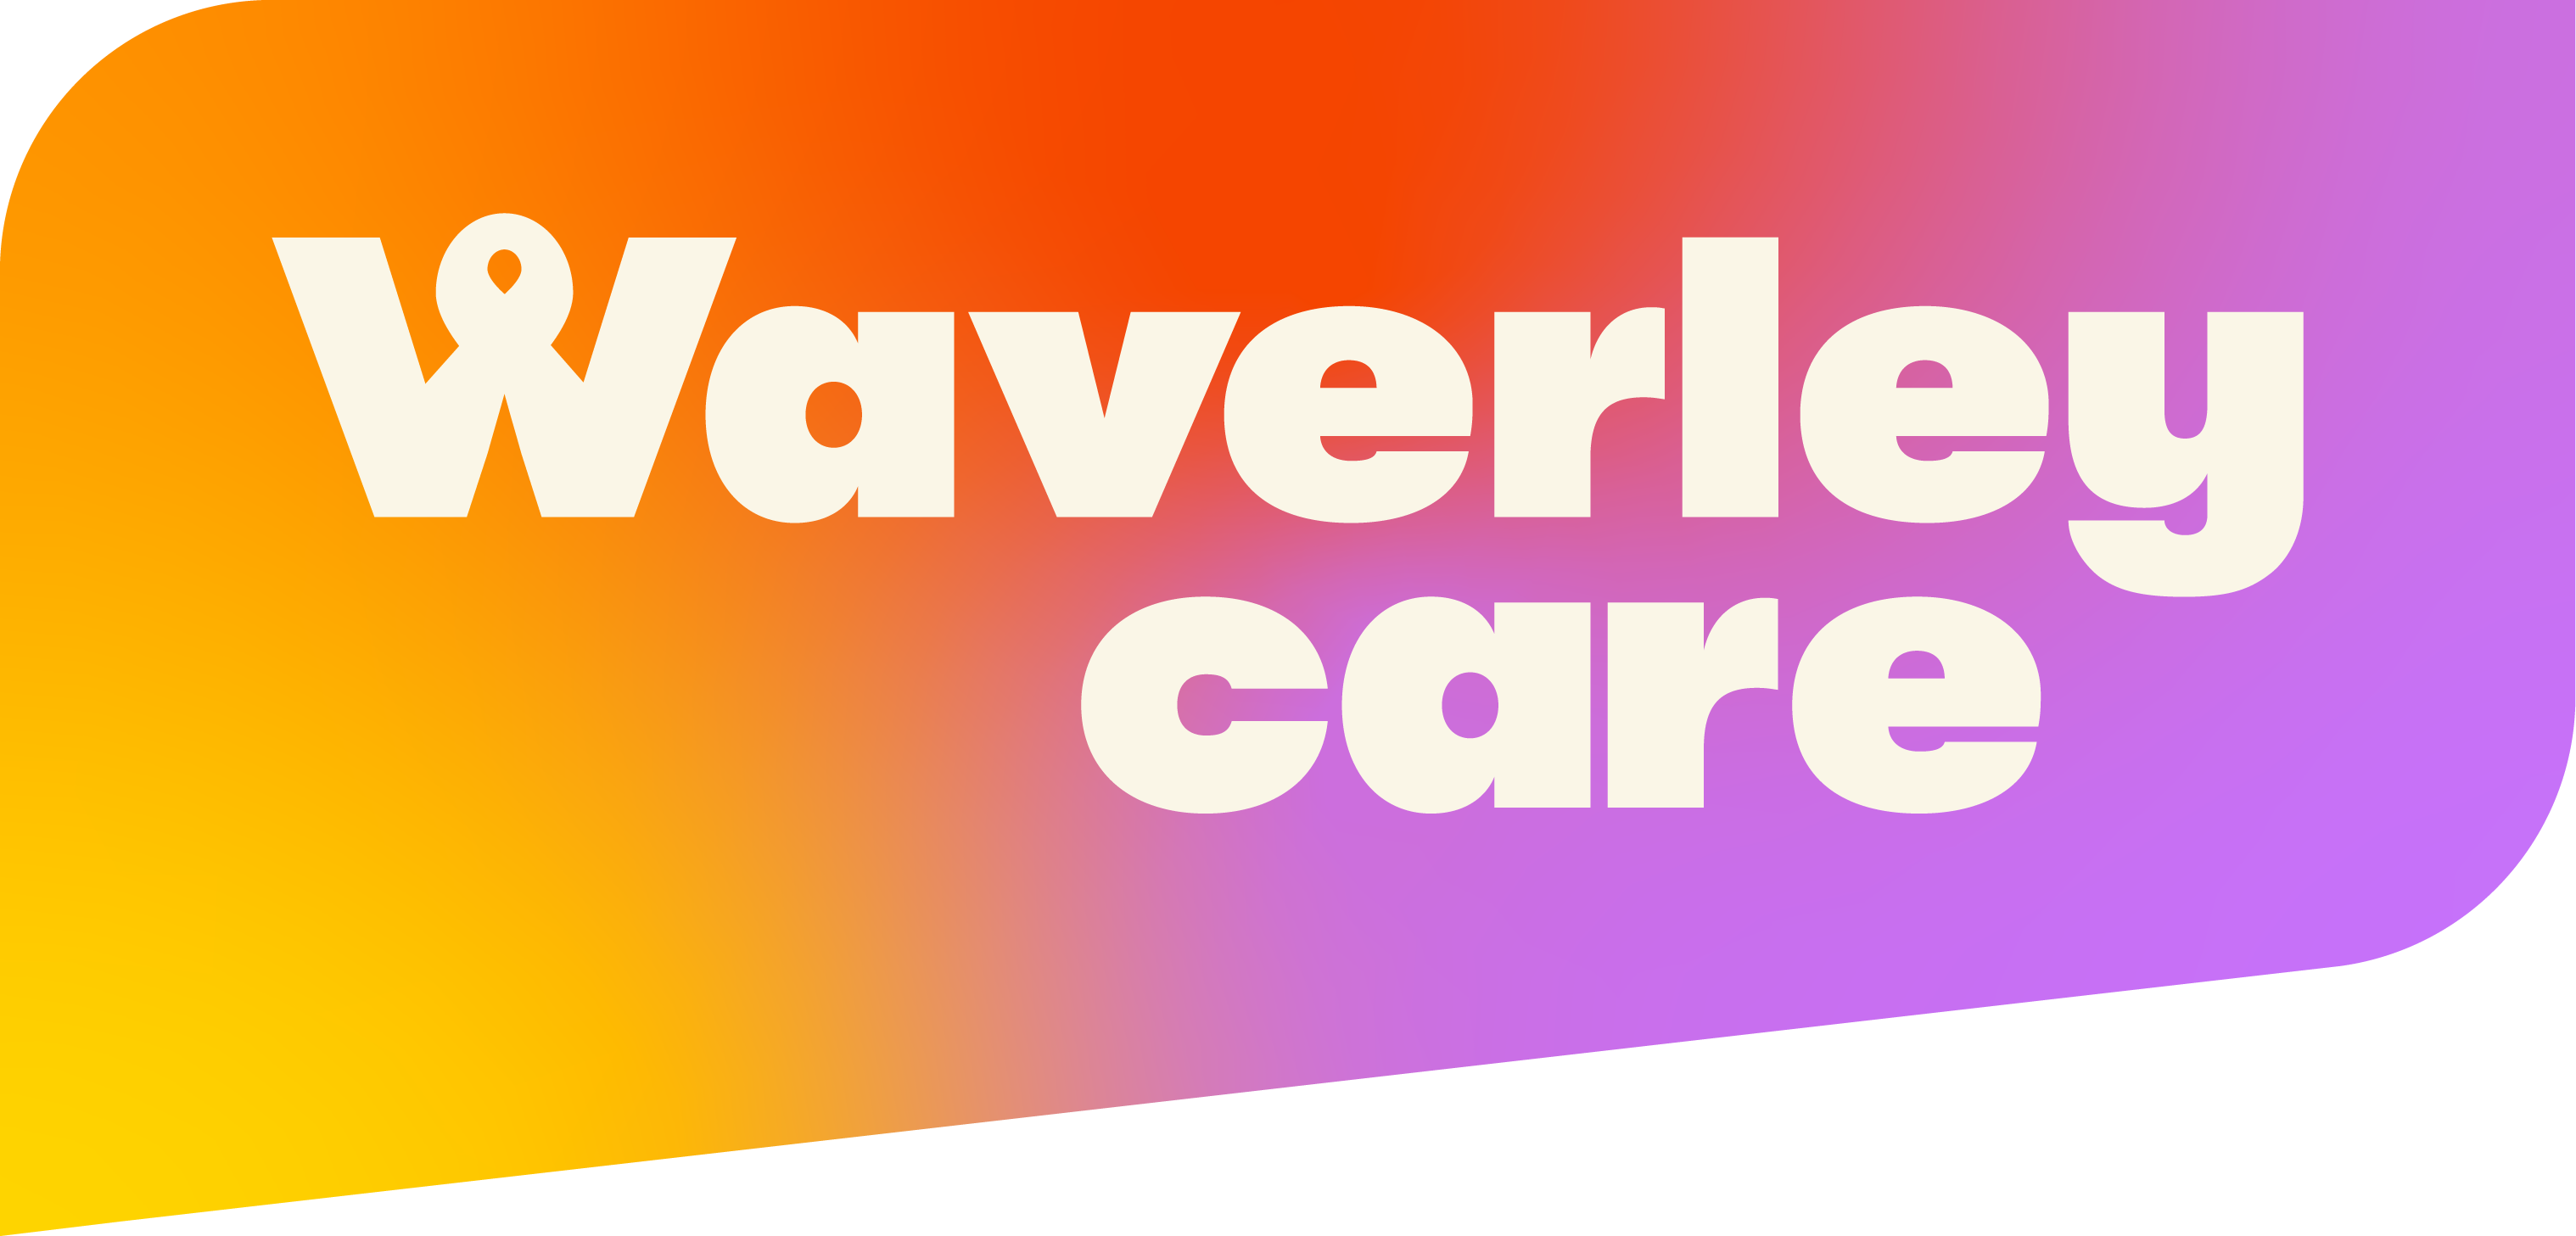 Waverley Care